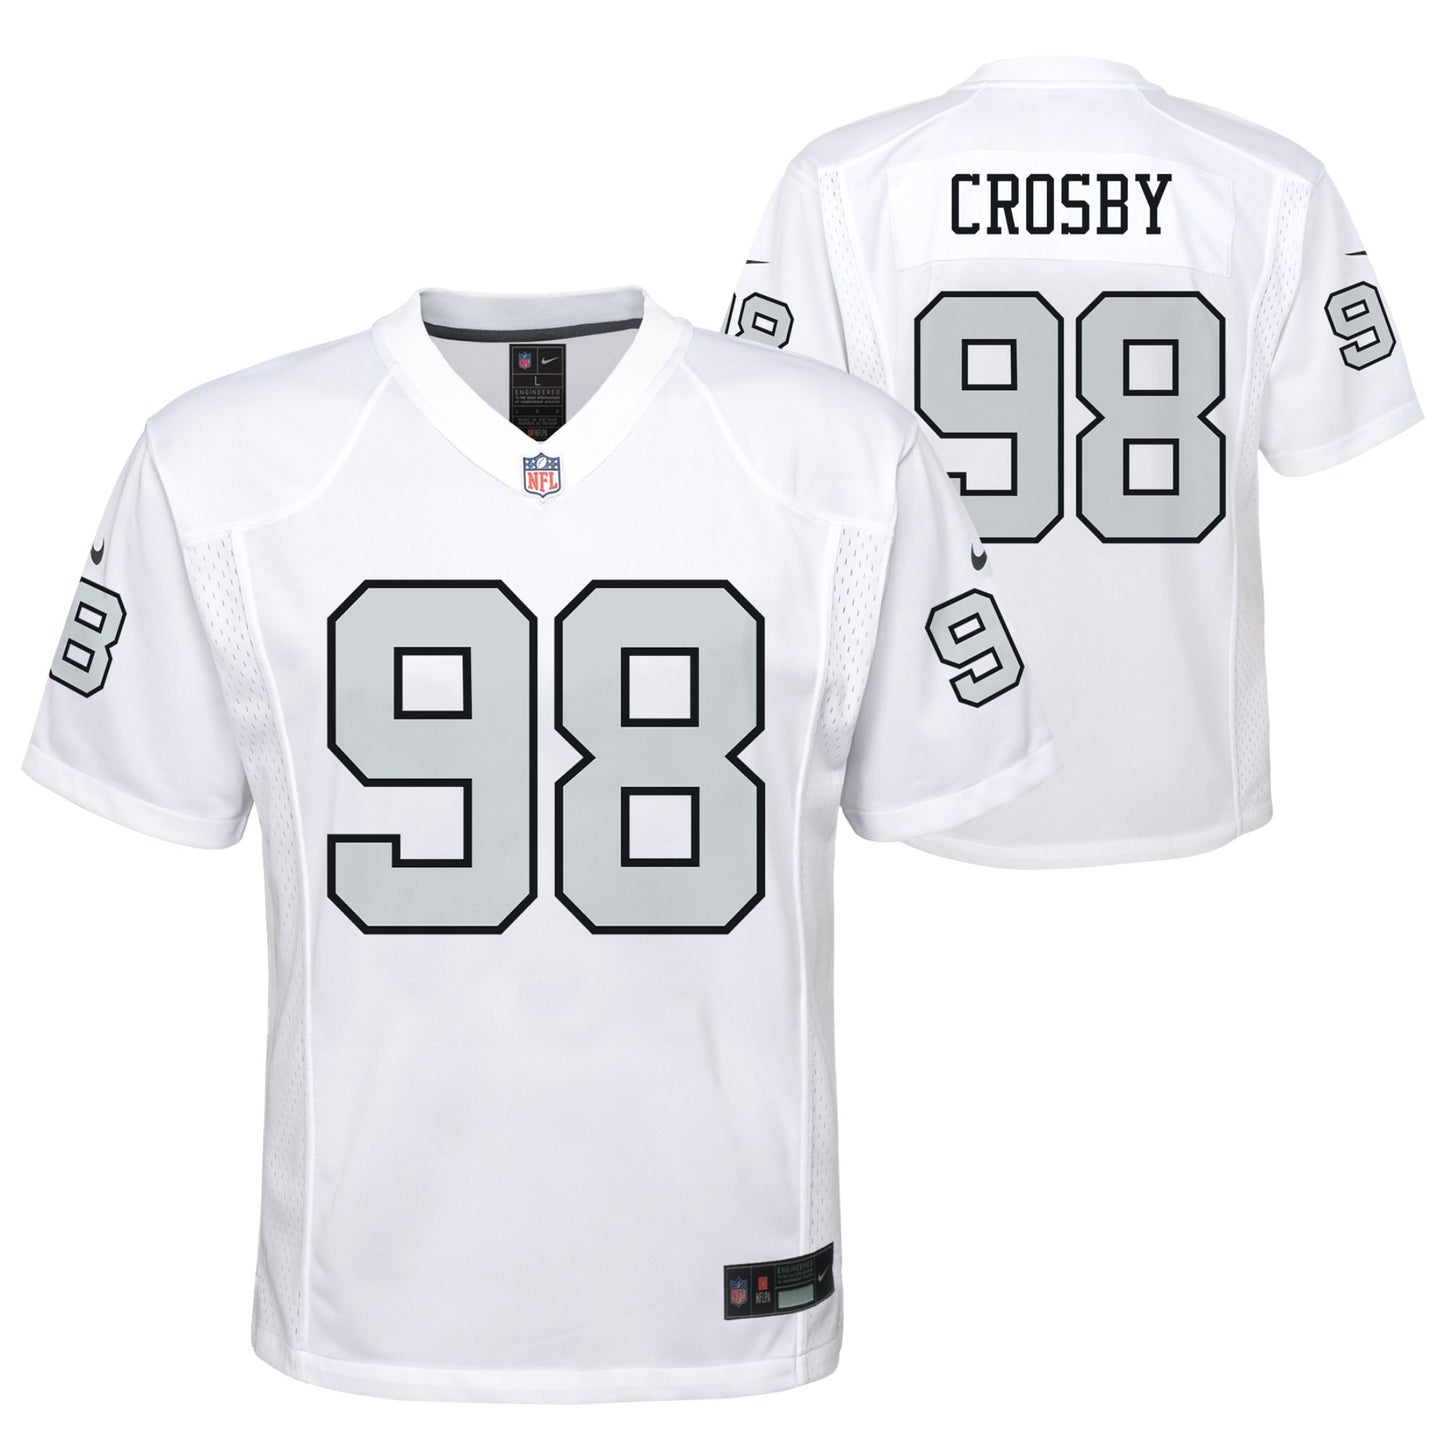 Maxx Crosby Las Vegas Raiders Nike Youth Game Jersey - White